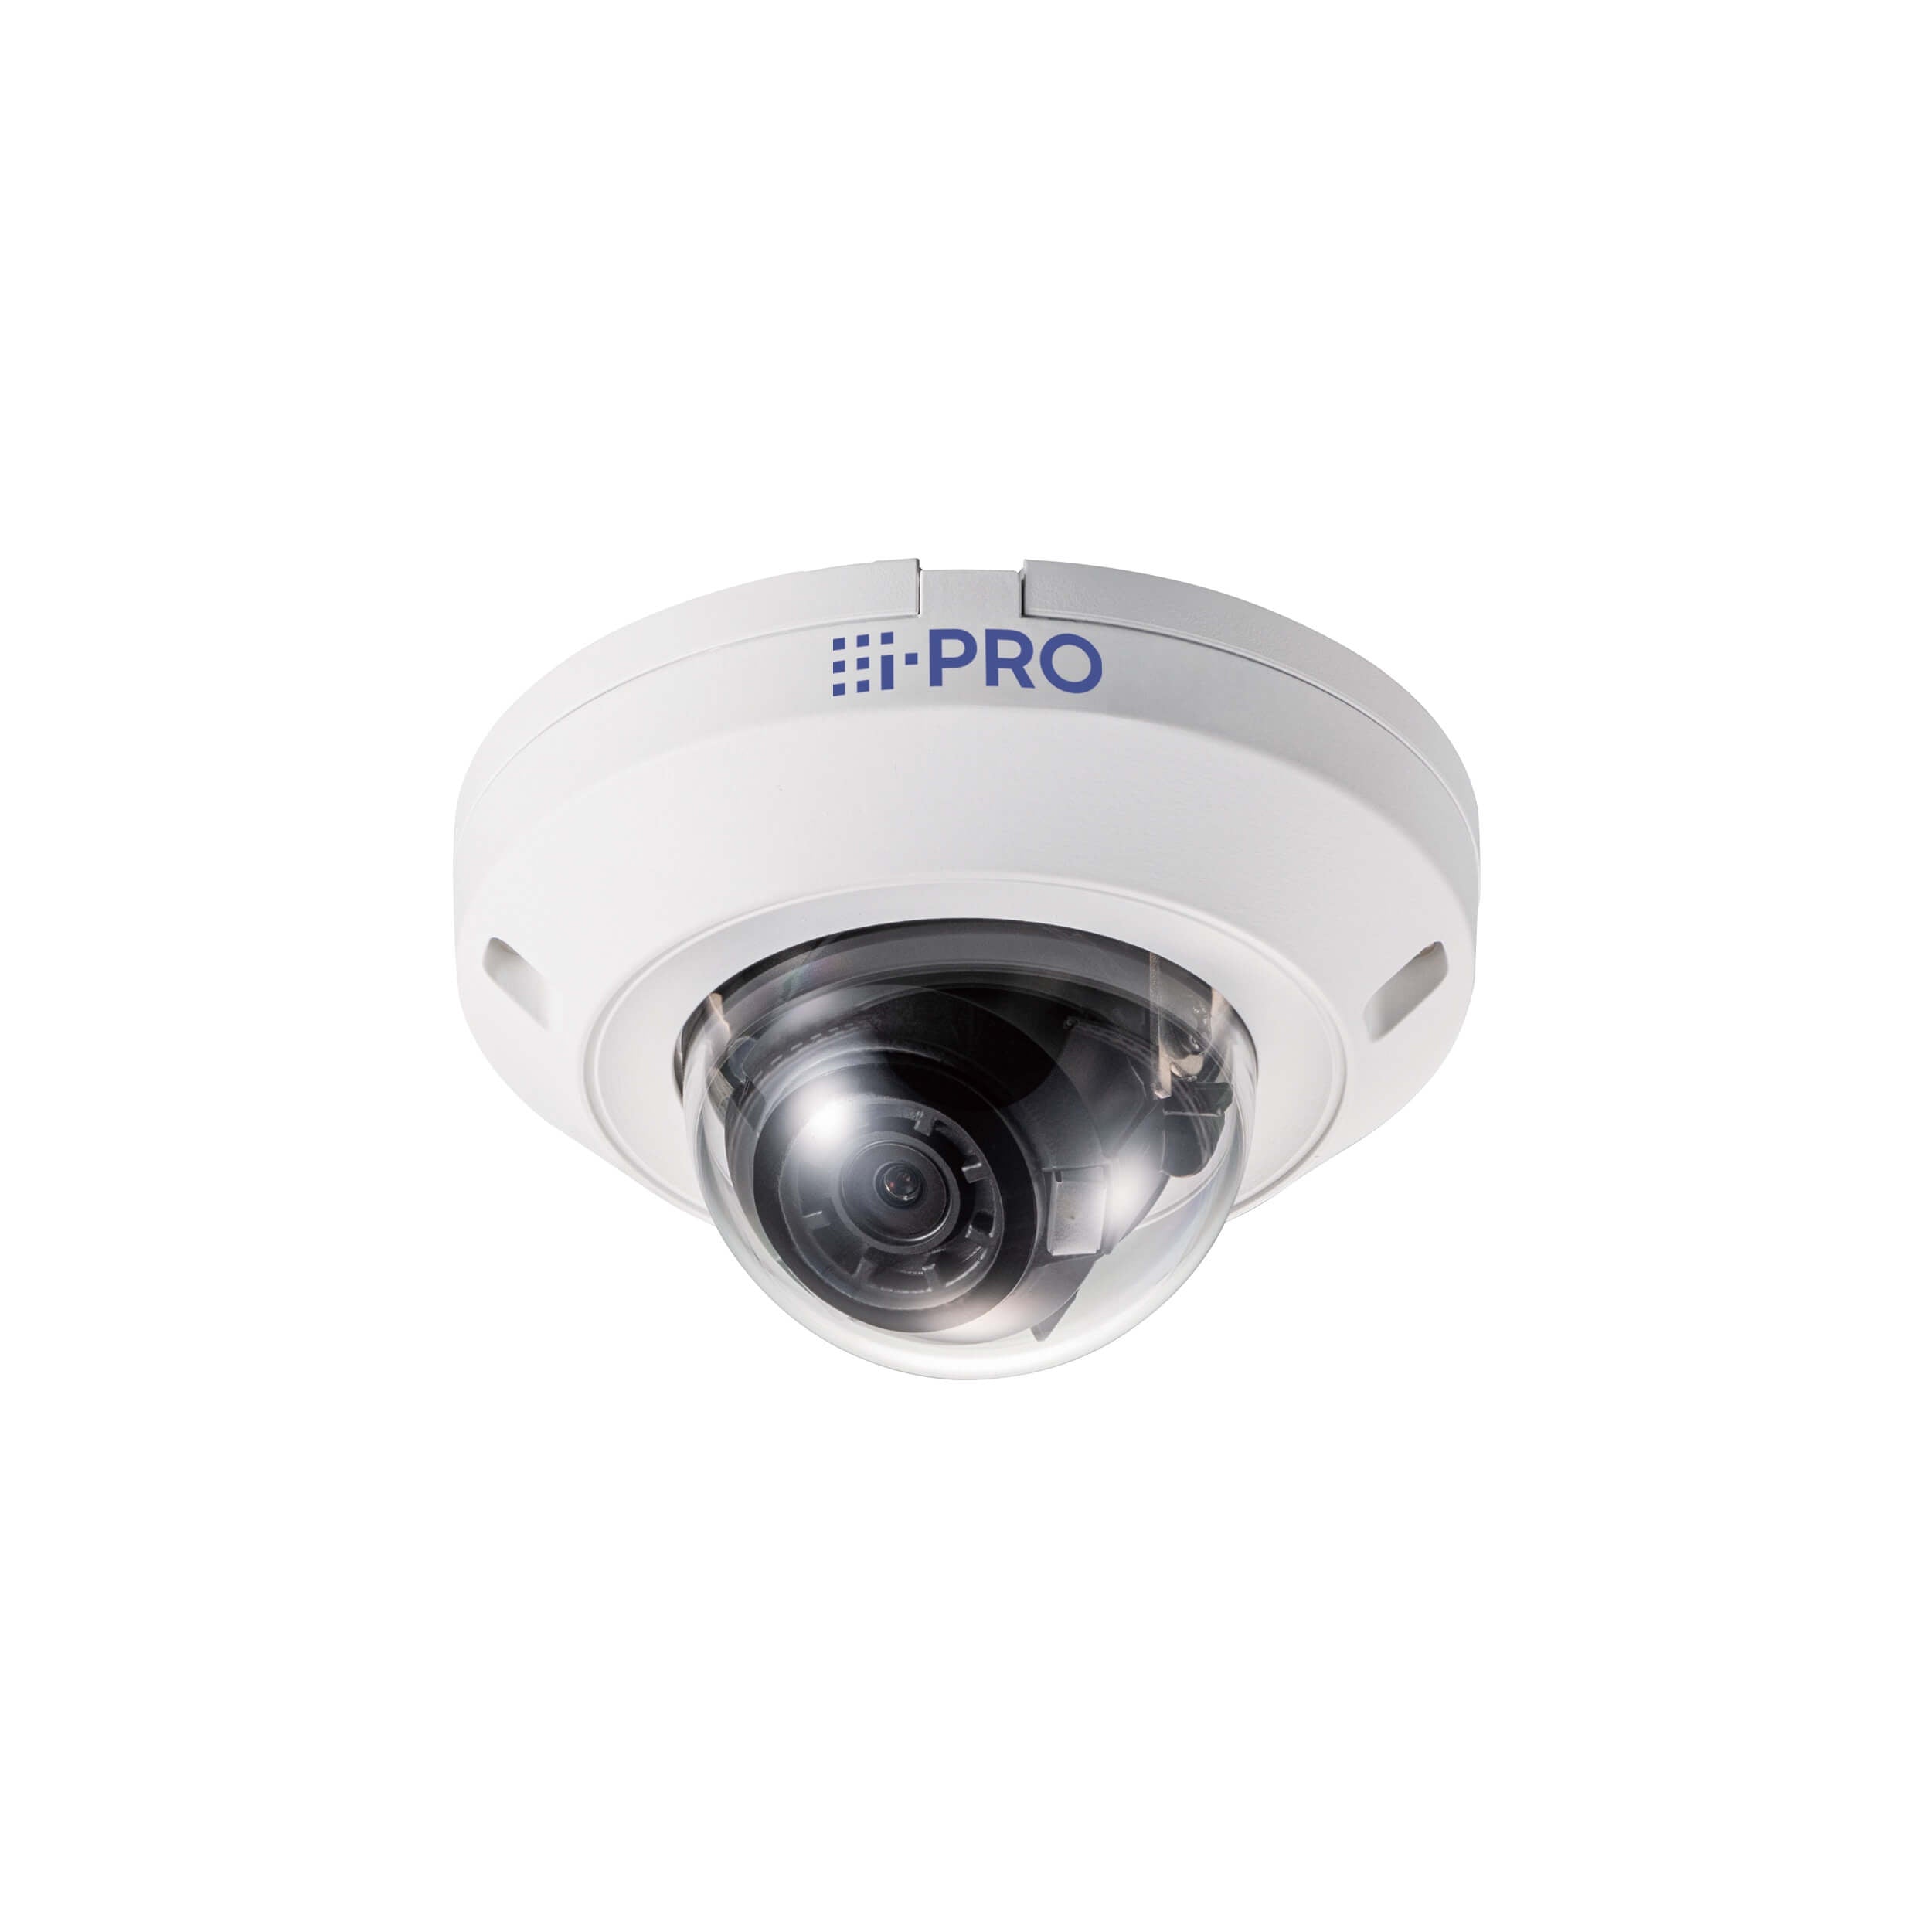 i-PRO WV-U2540LA 4 Megapixel Network IR Indoor Dome Camera with 3.2mm Lens